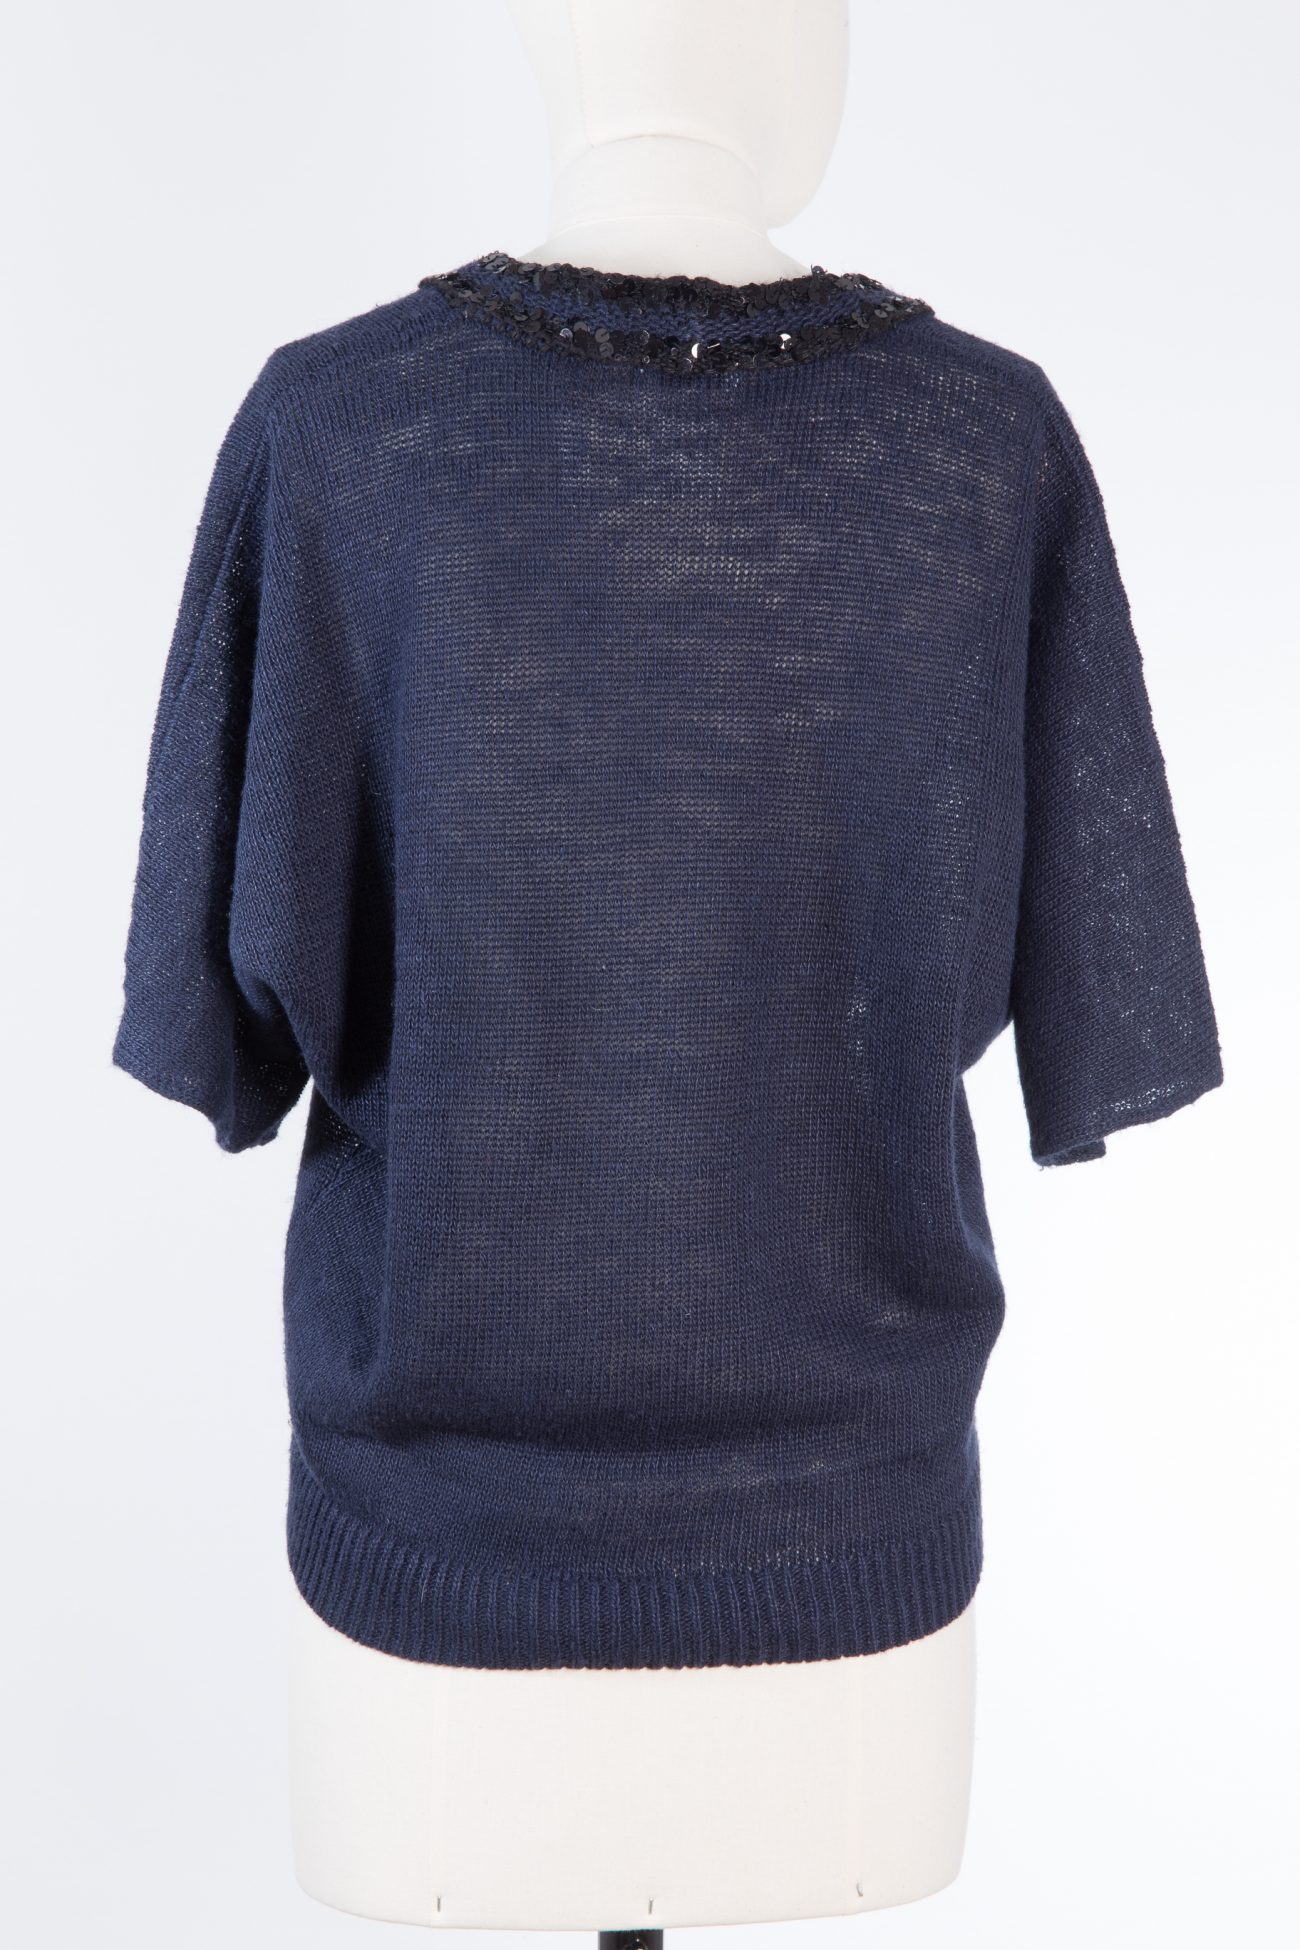 Brunello Cucinelli Sweater, S. Sequin embellished hemp sweater